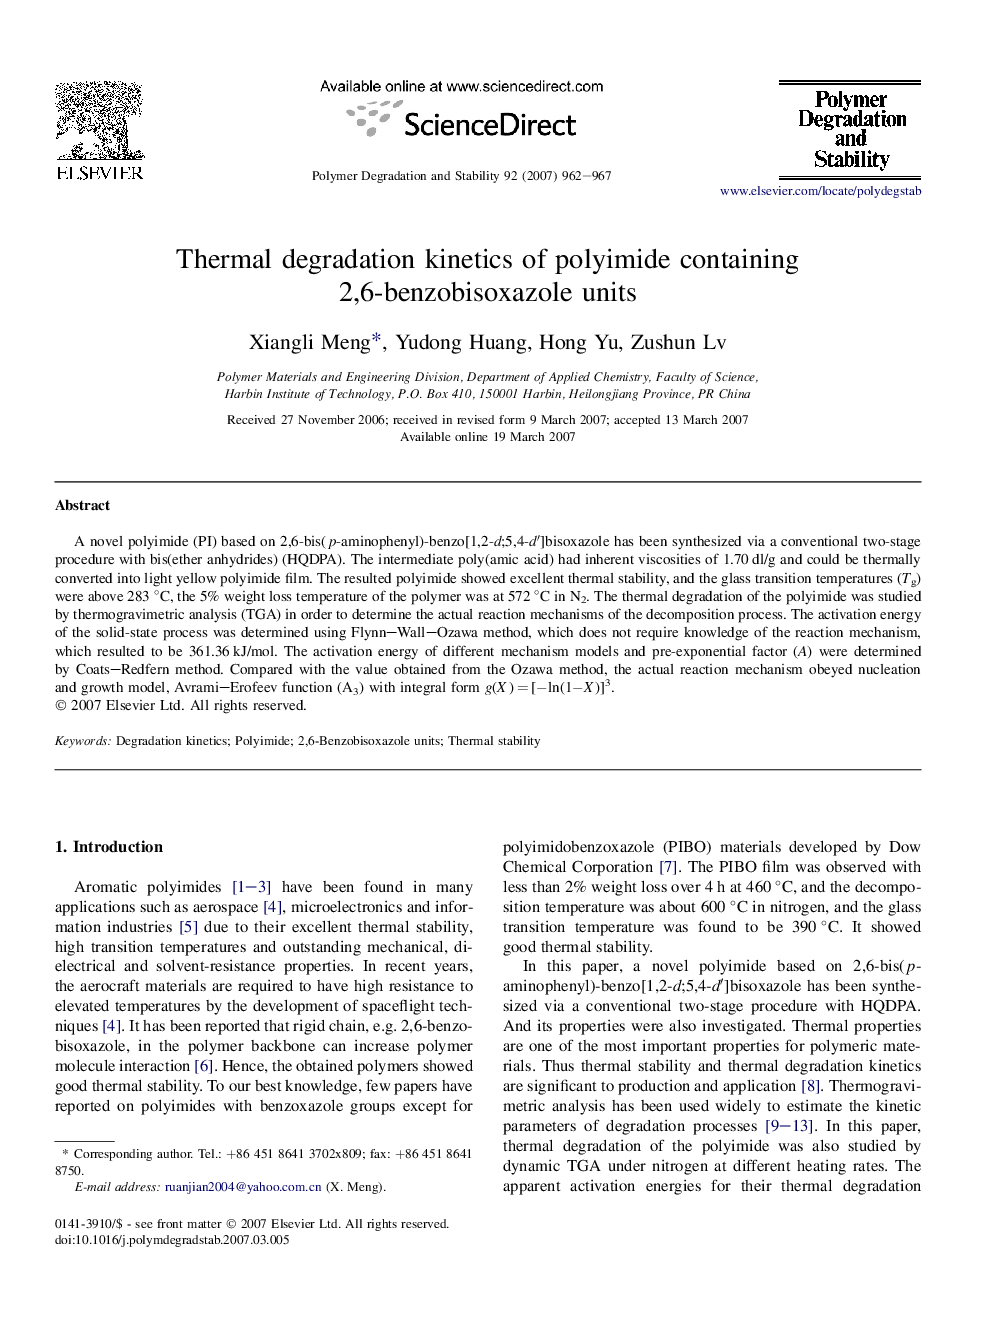 Thermal degradation kinetics of polyimide containing 2,6-benzobisoxazole units